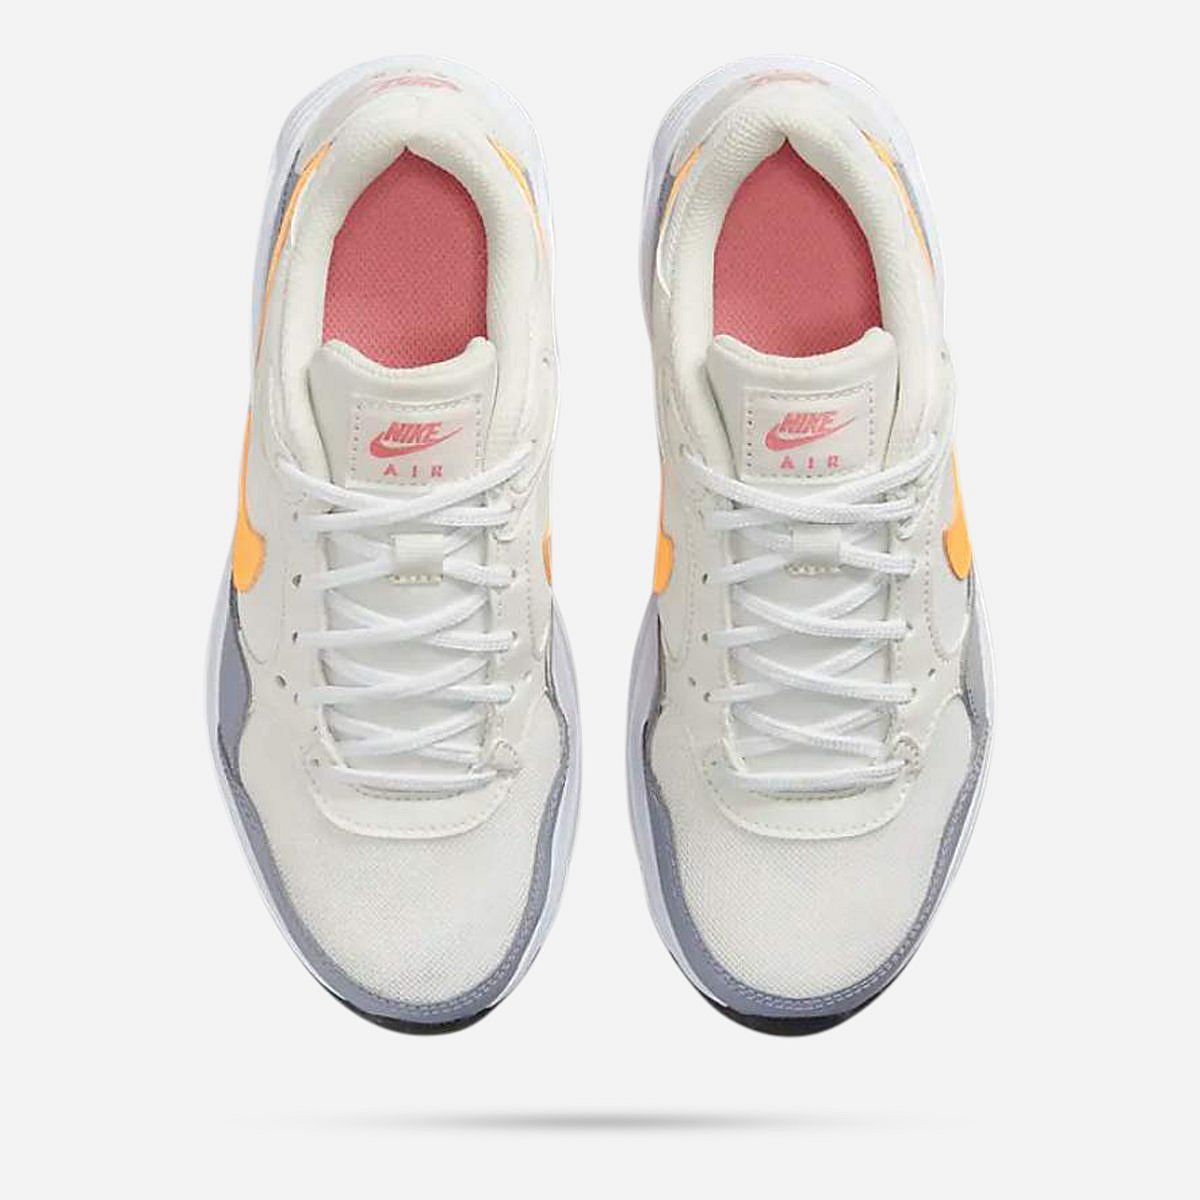 AN298551 Air Max Sc Junior Sneakers